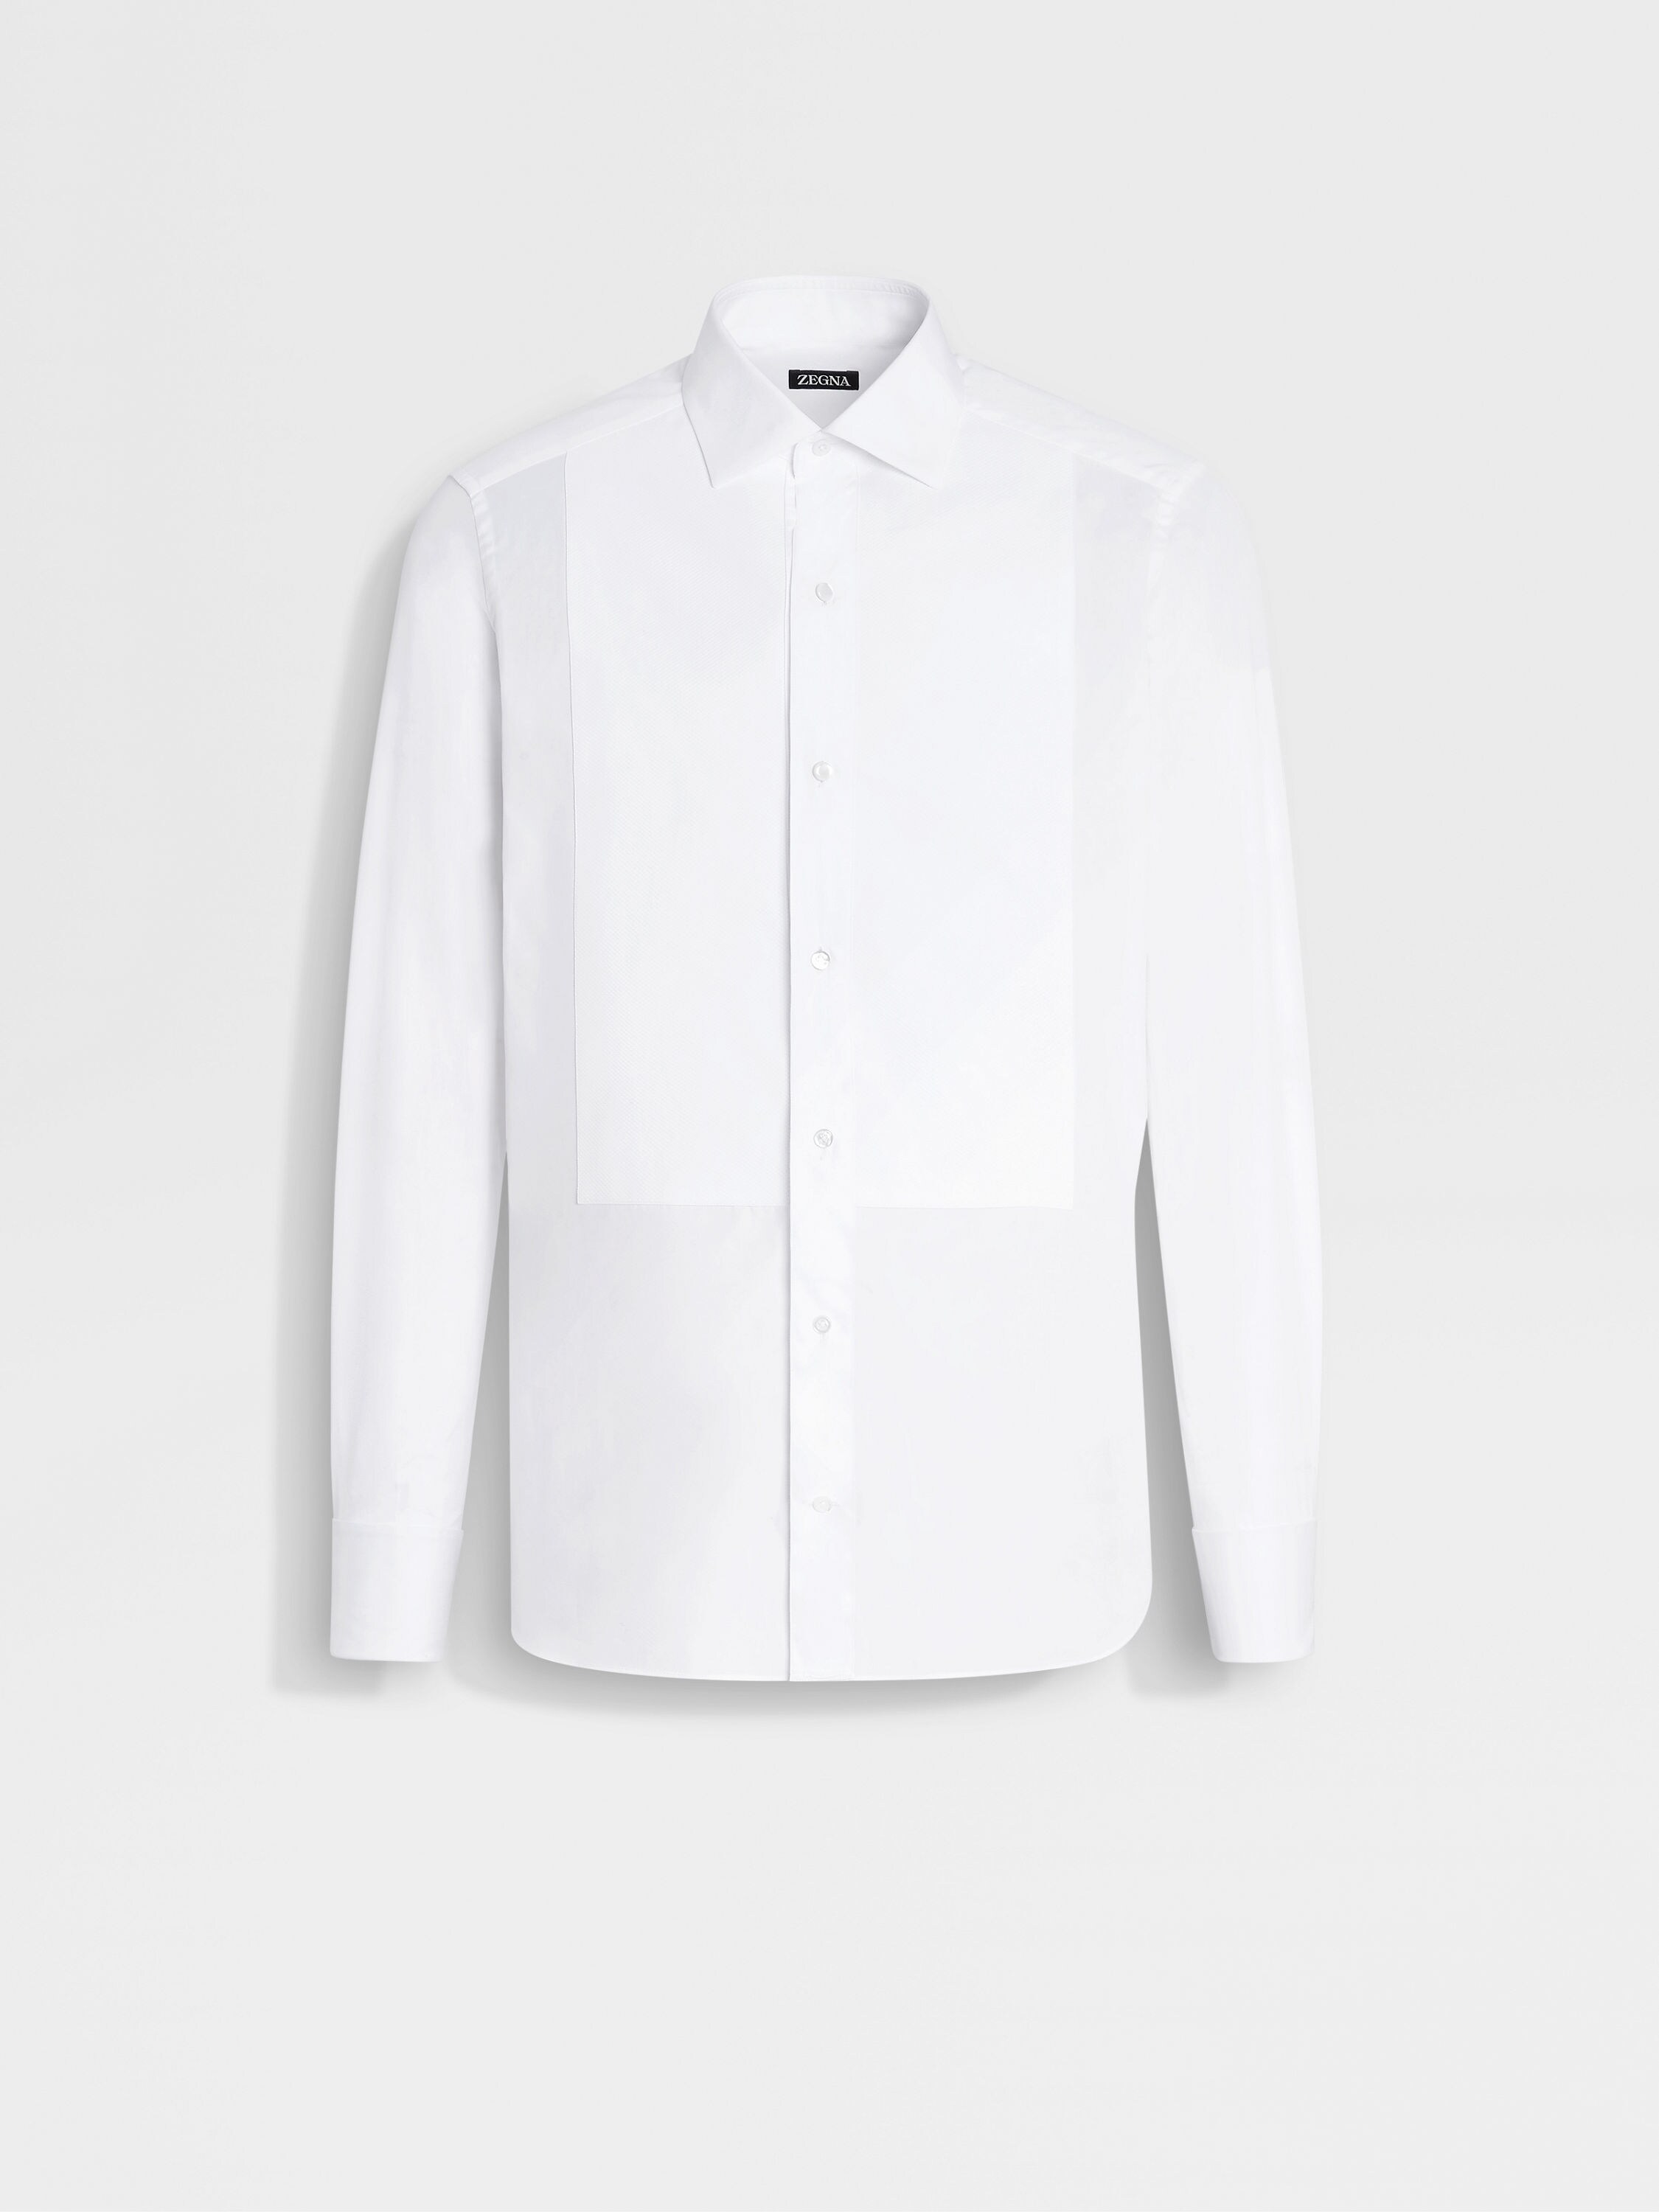 T-shirt Tuxedo, Tuxedo White s, cdr, angle png